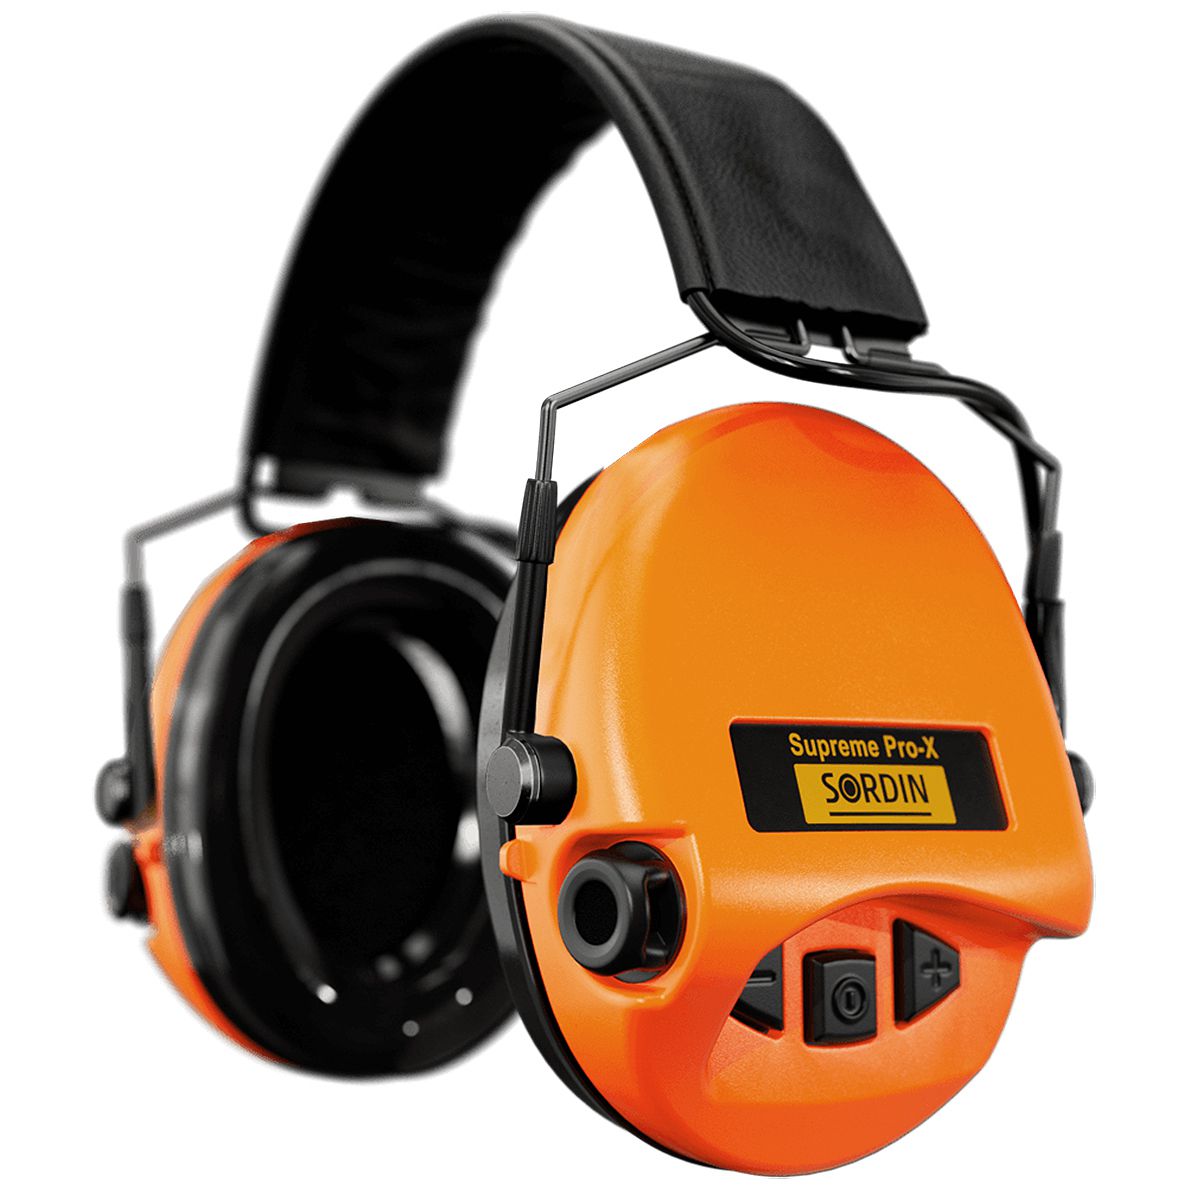 Sordin Supreme Pro-X Slim hearing protection - active hunting hearing protector - EN 352 - foam cushion, leather band & orange capsule